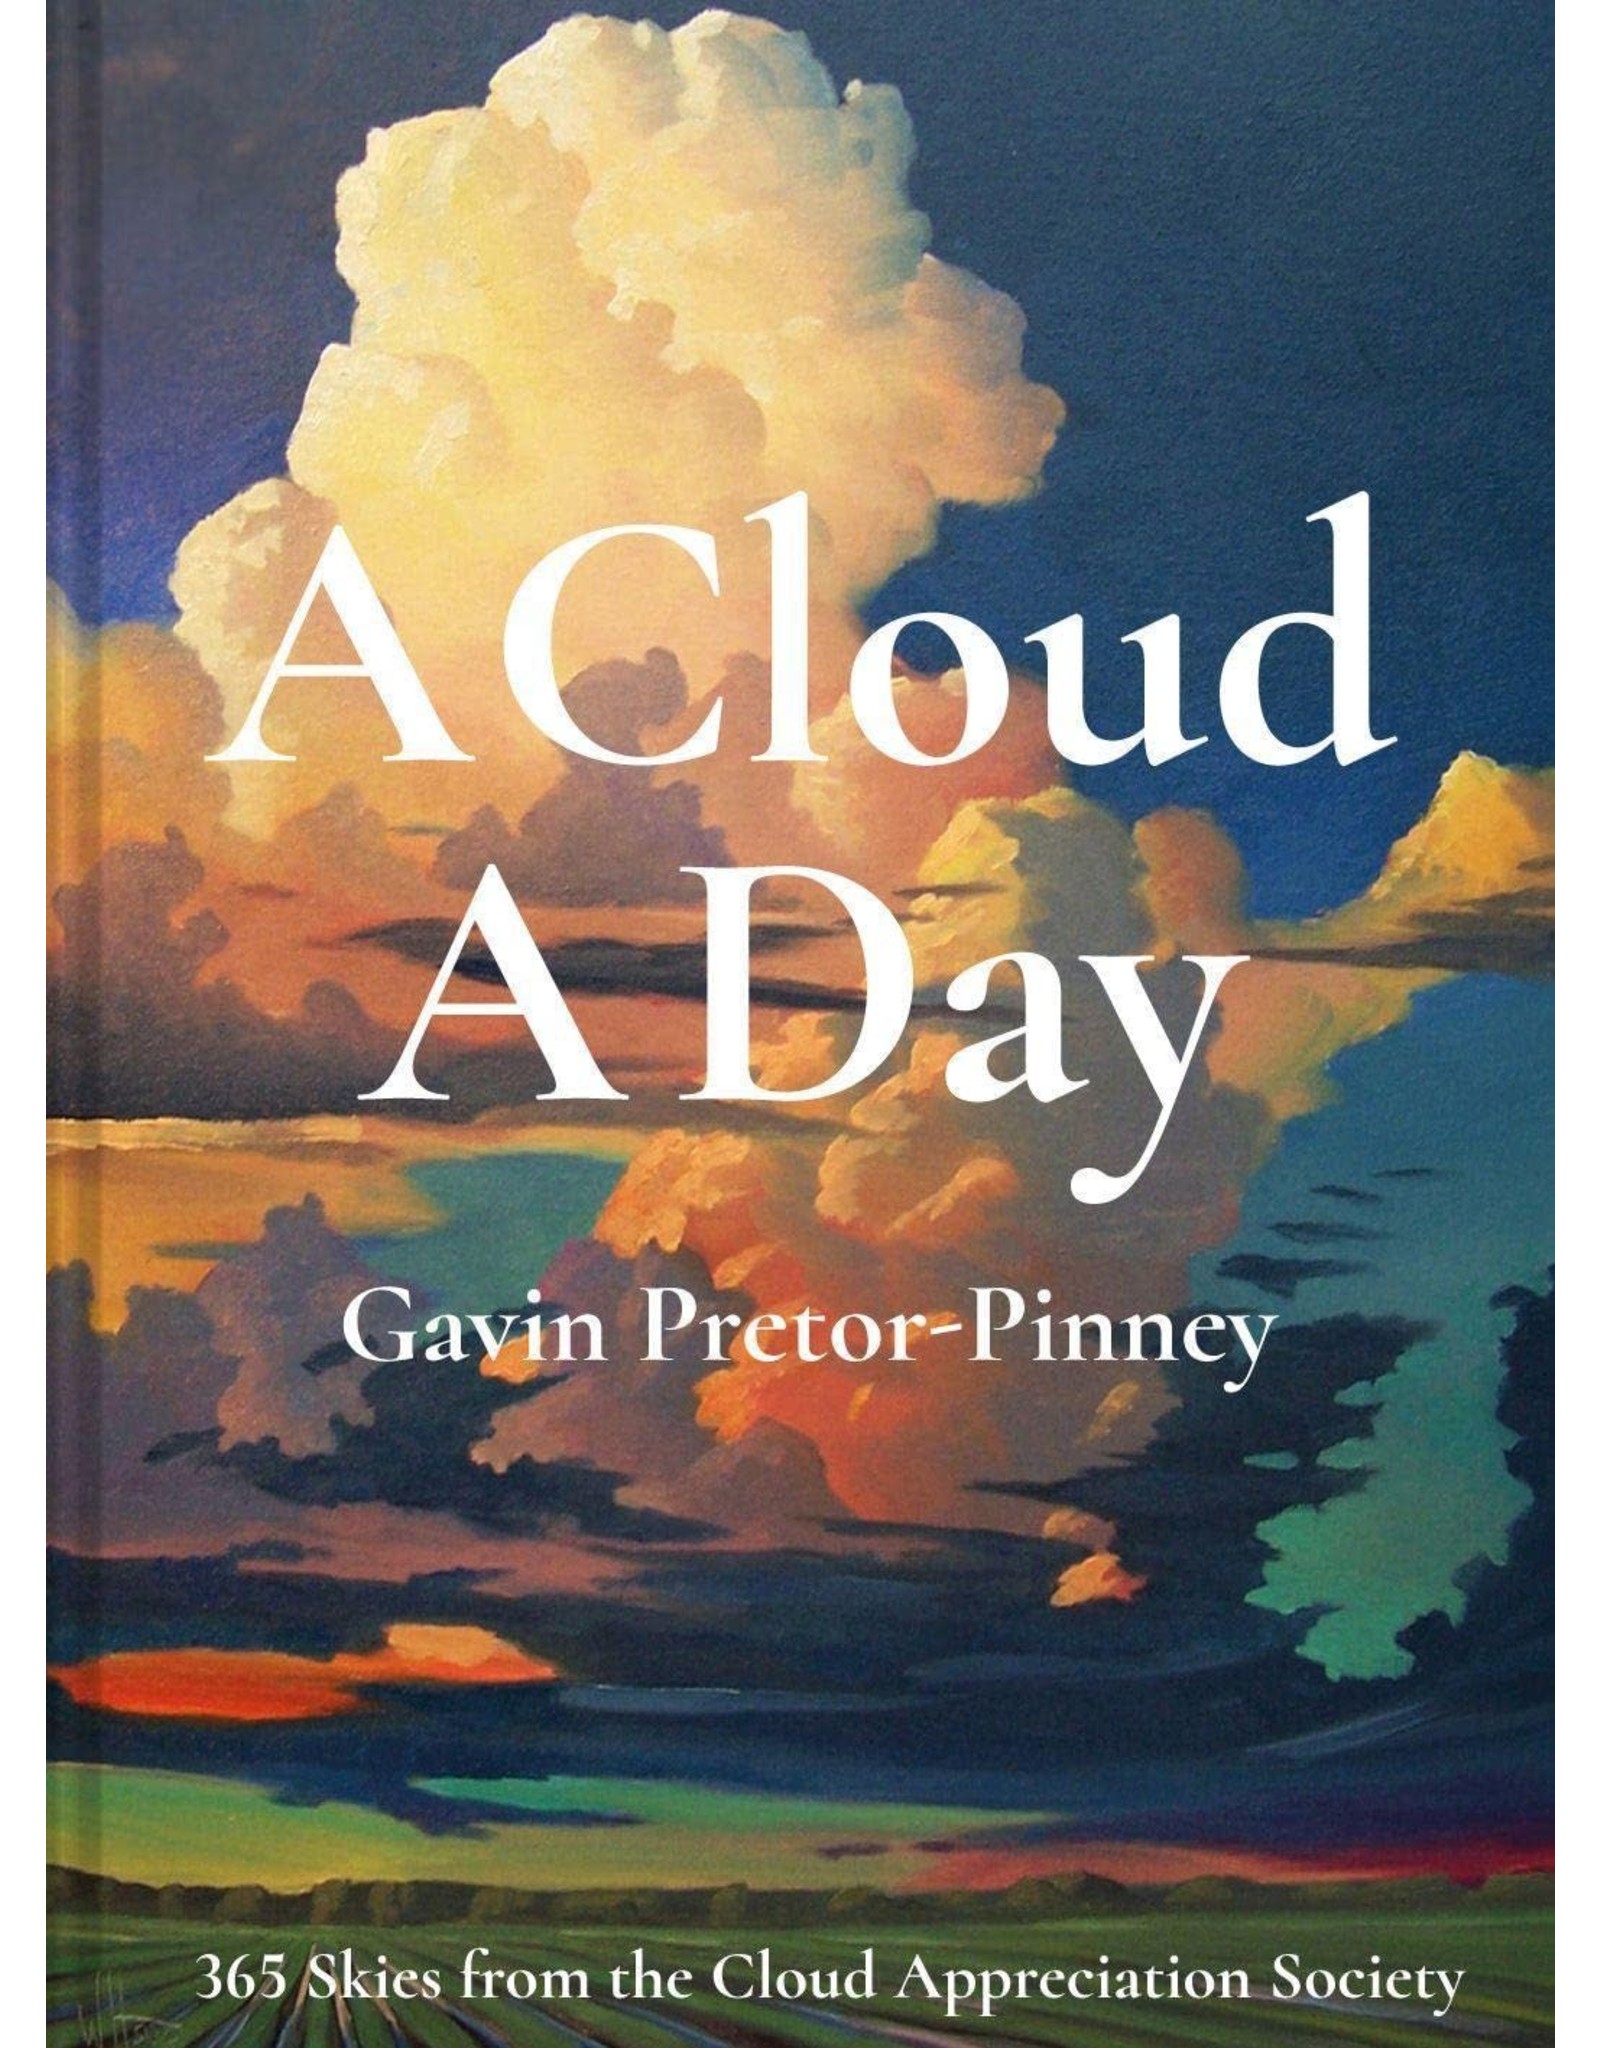 Hachette Book Group A Cloud a Day